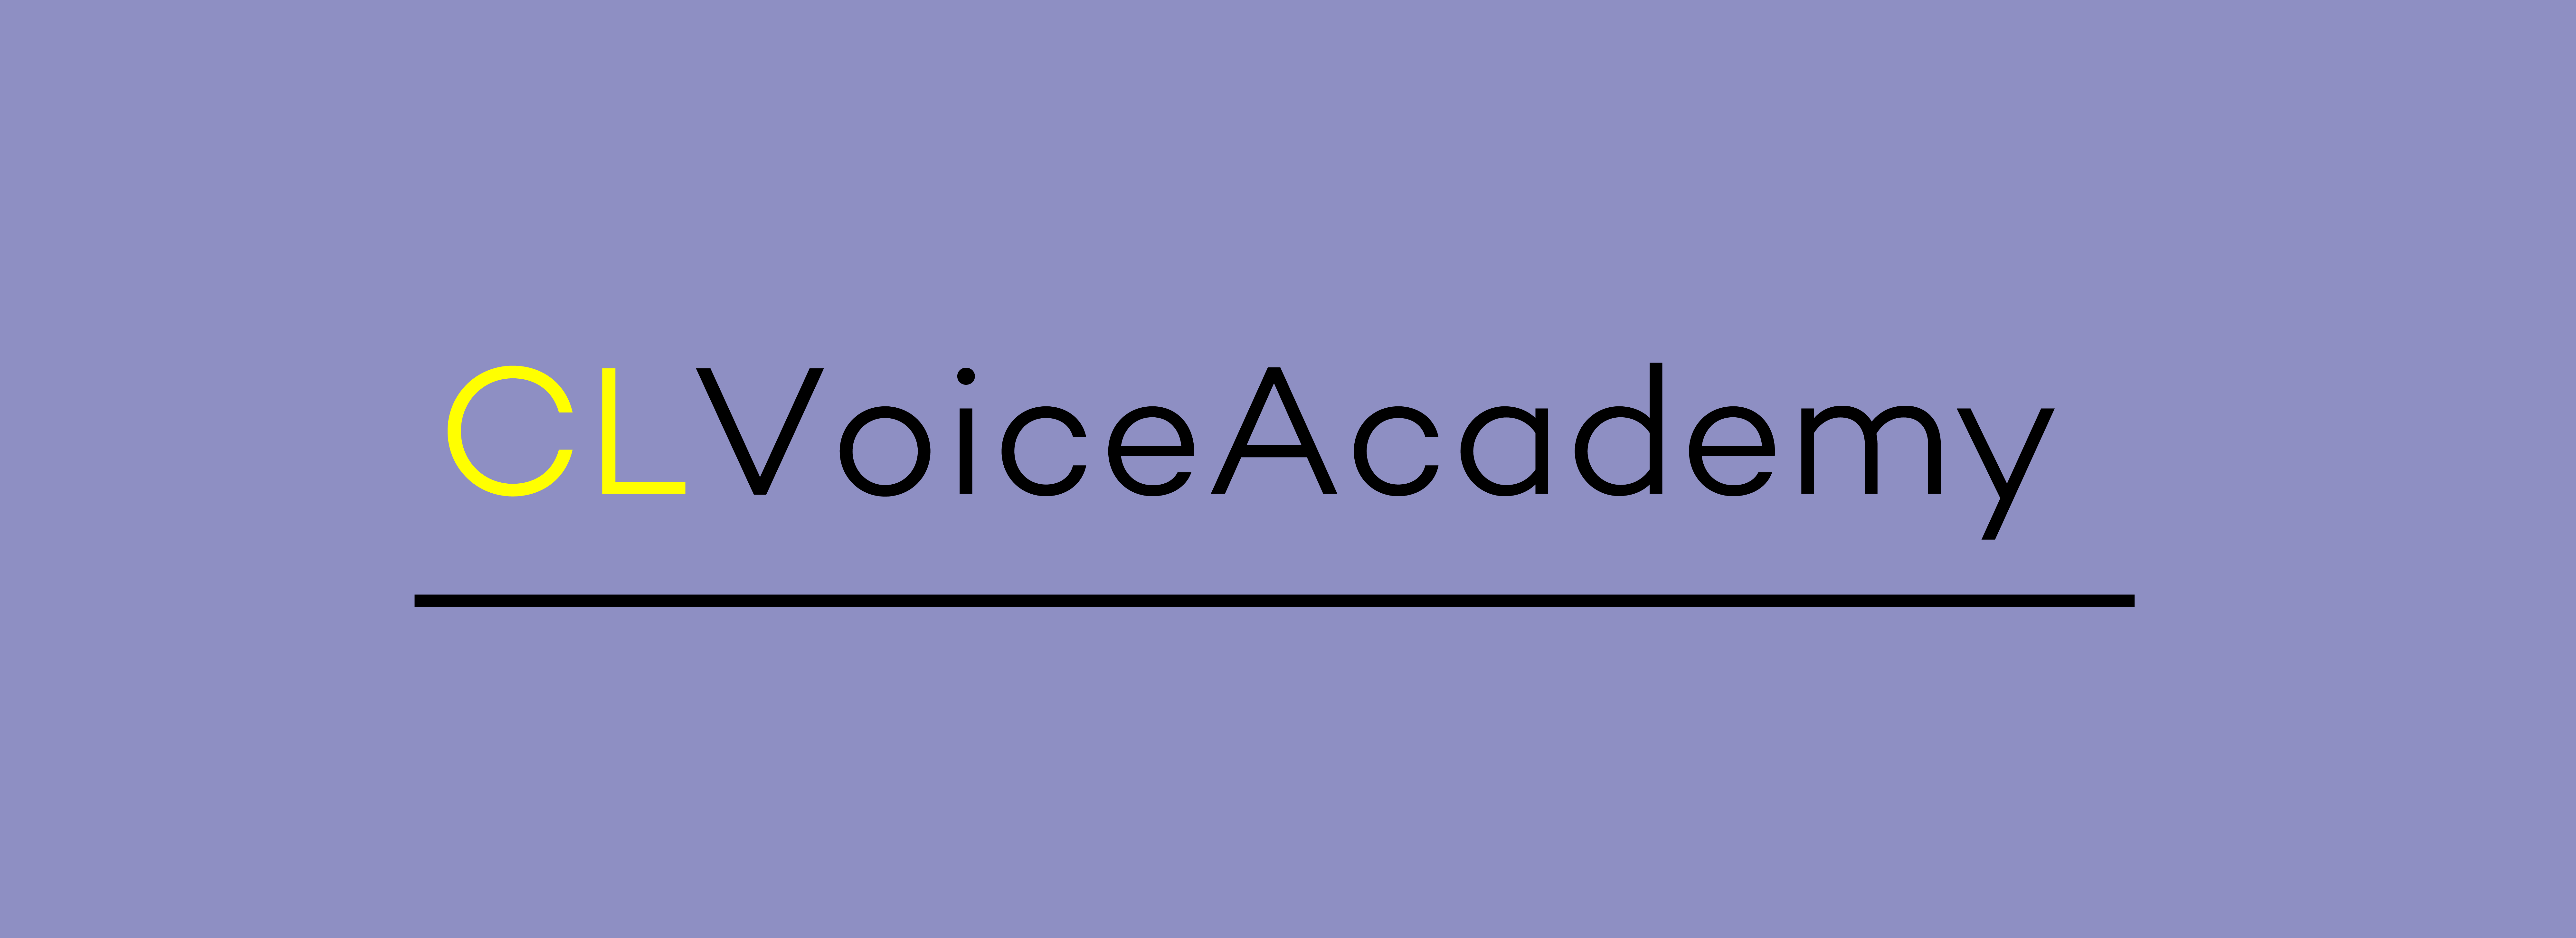 CL Voice Academy